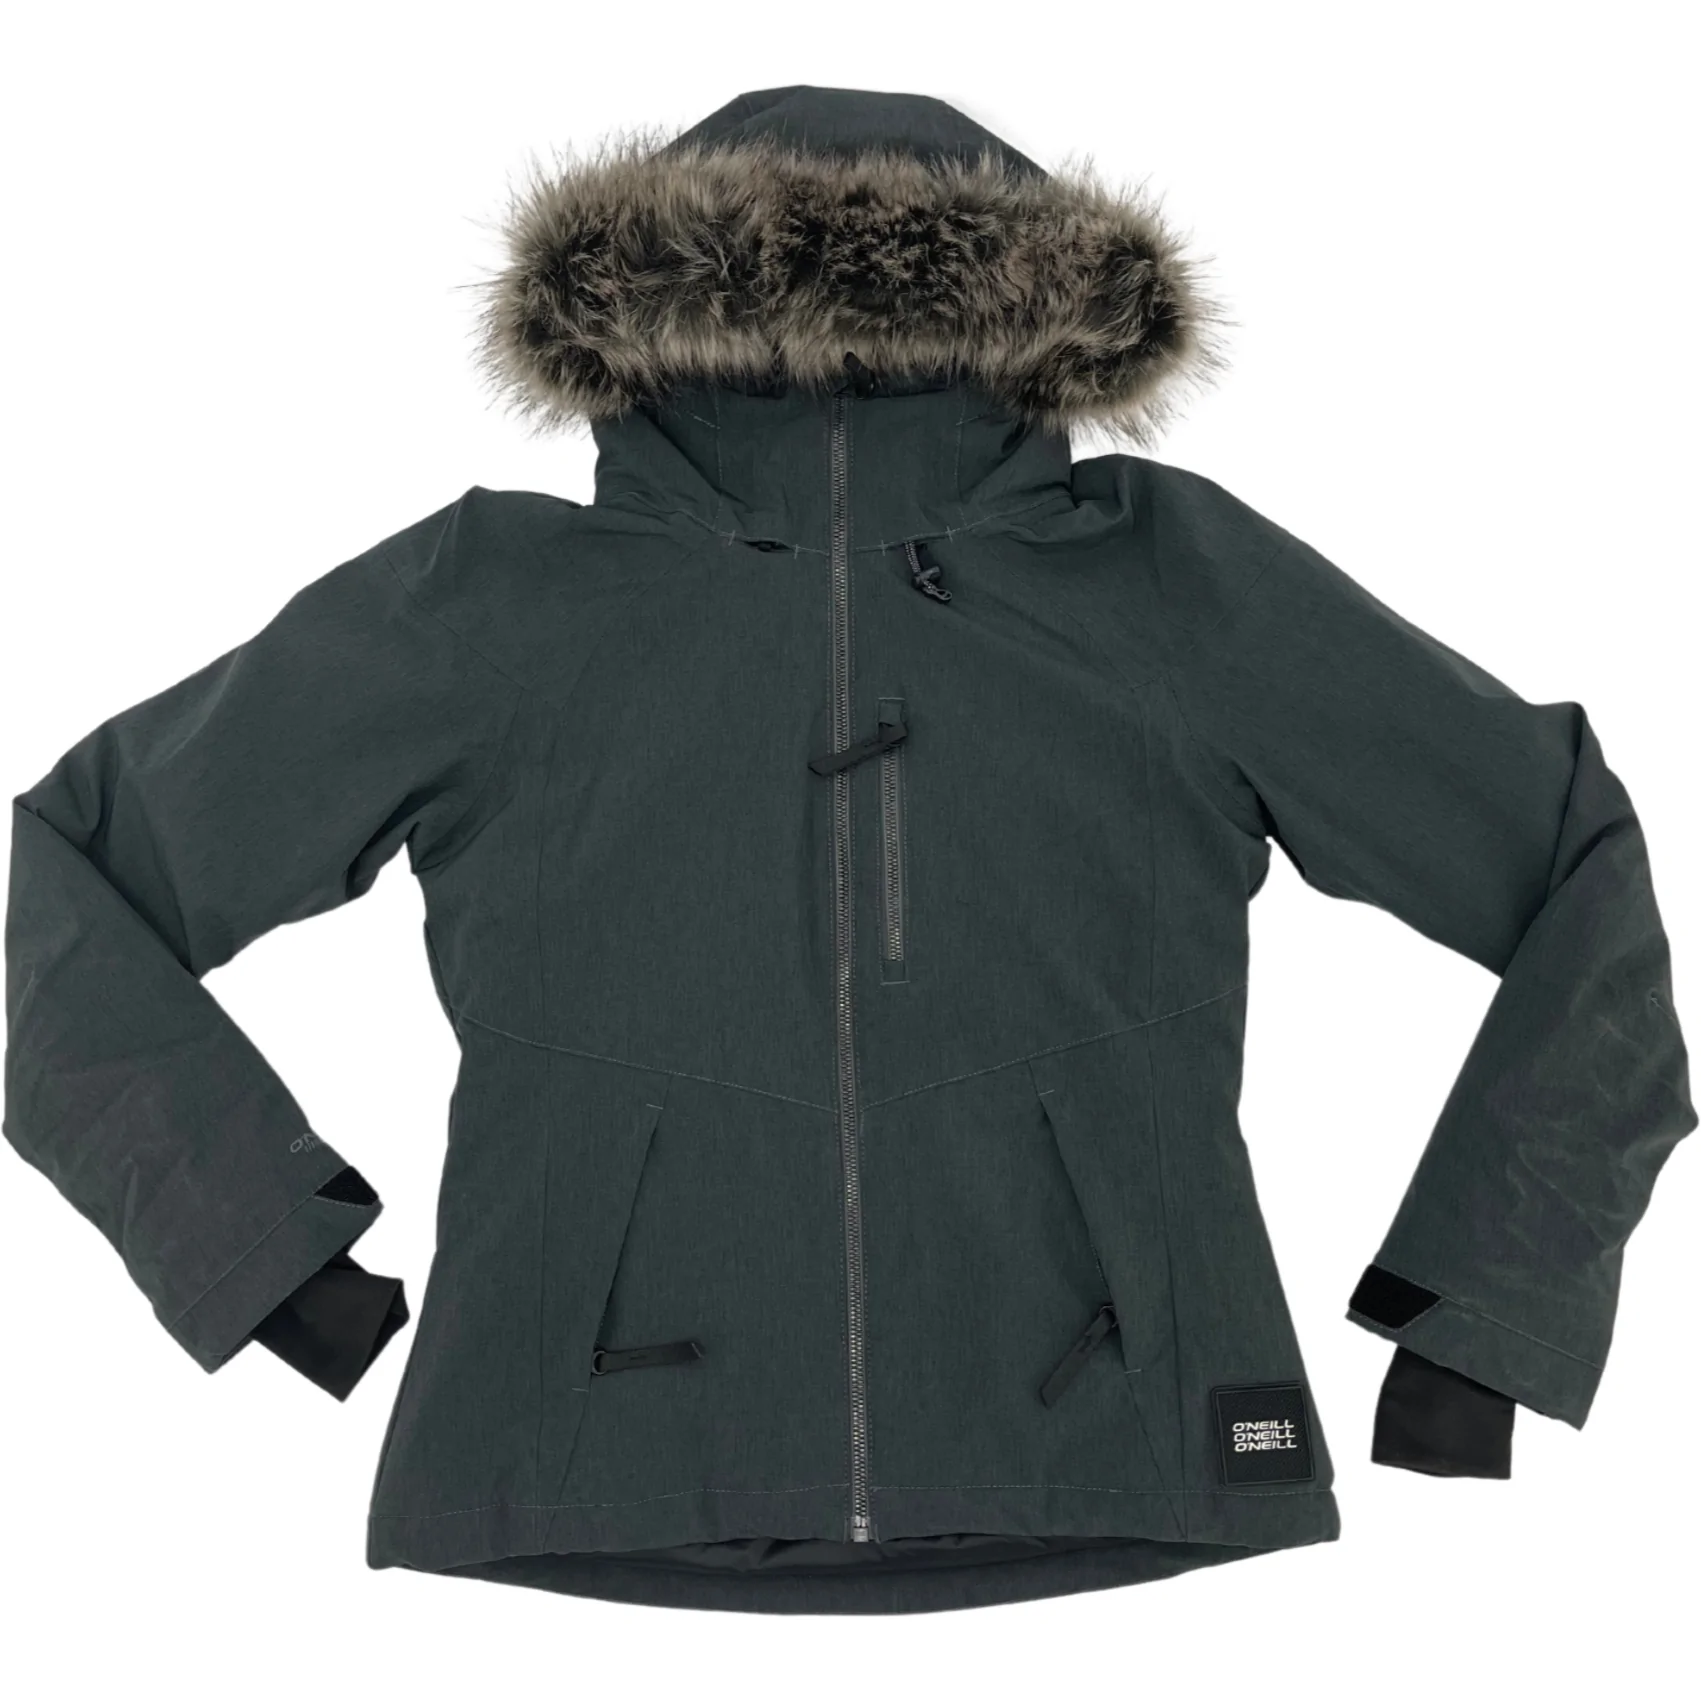 O'Neill Women's Winter Jacket / Charcoal / Ladies Ski Jacket / Size XS